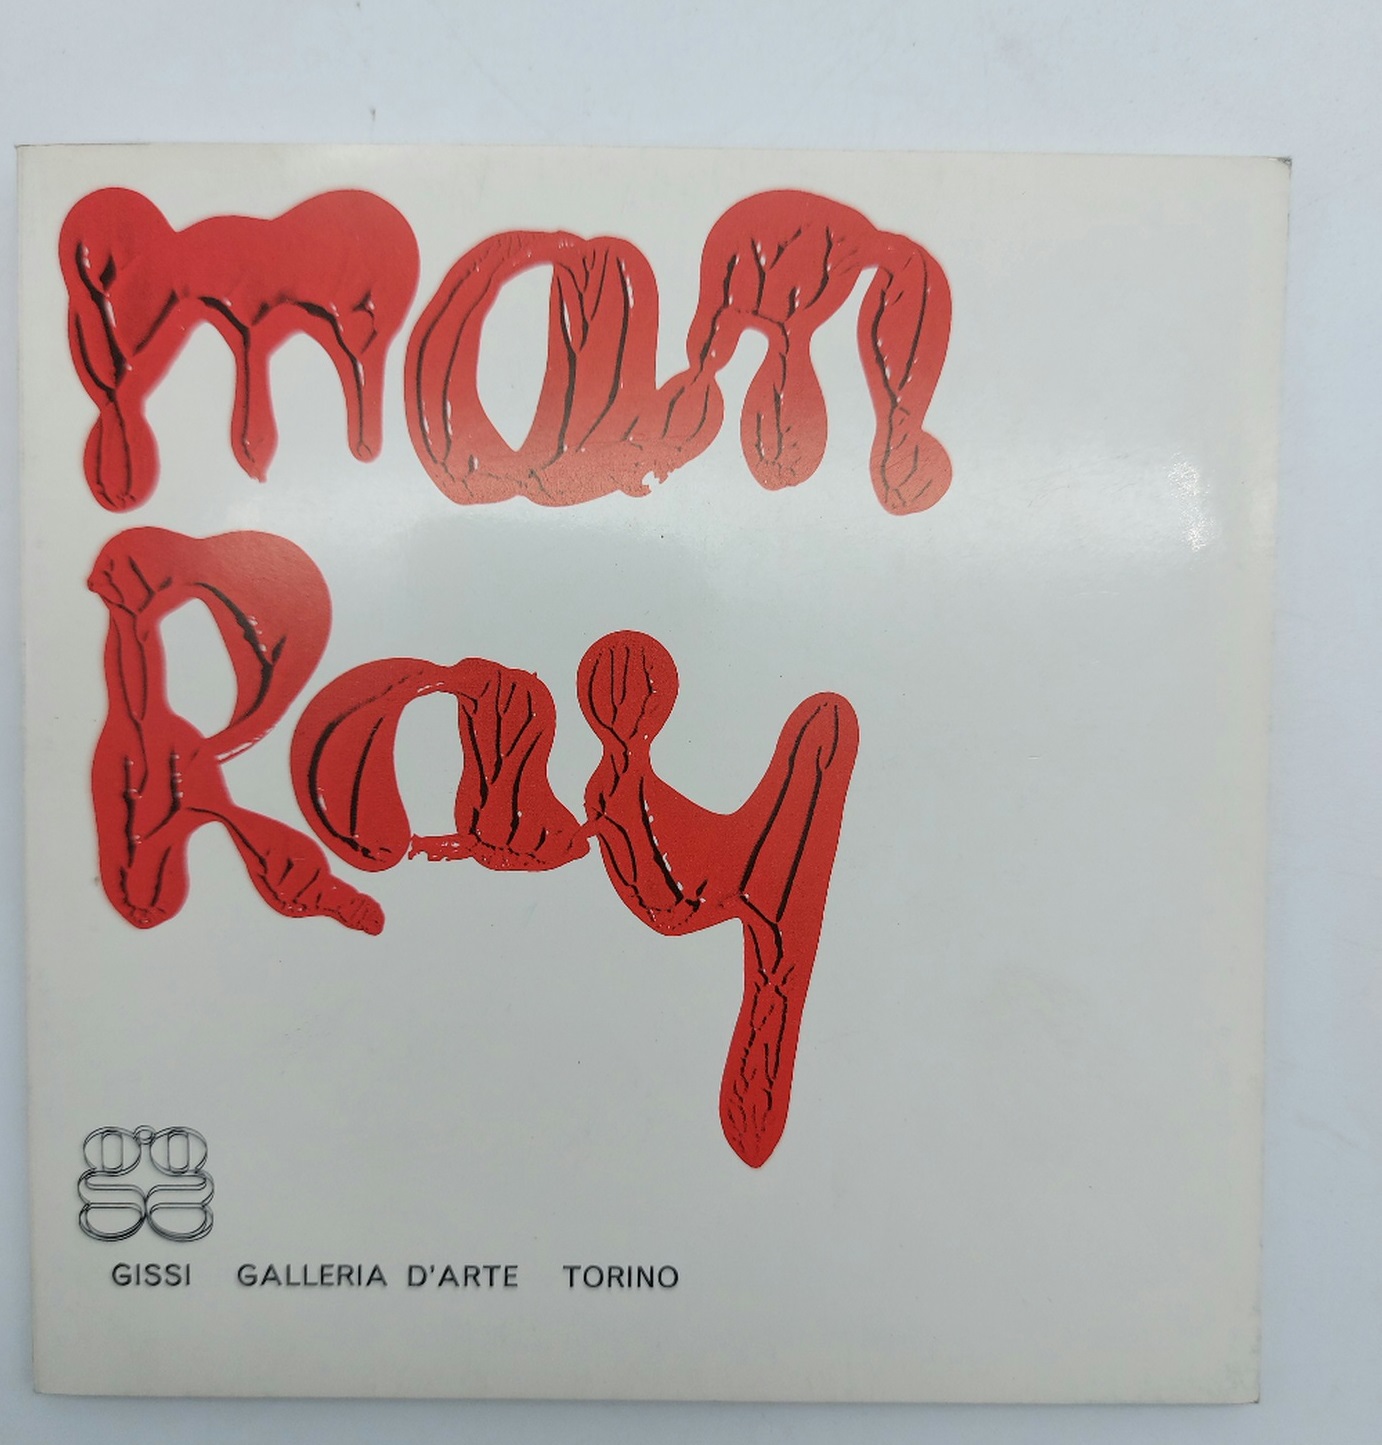 Man Ray. Gissi Galleria d'Arte, Torino